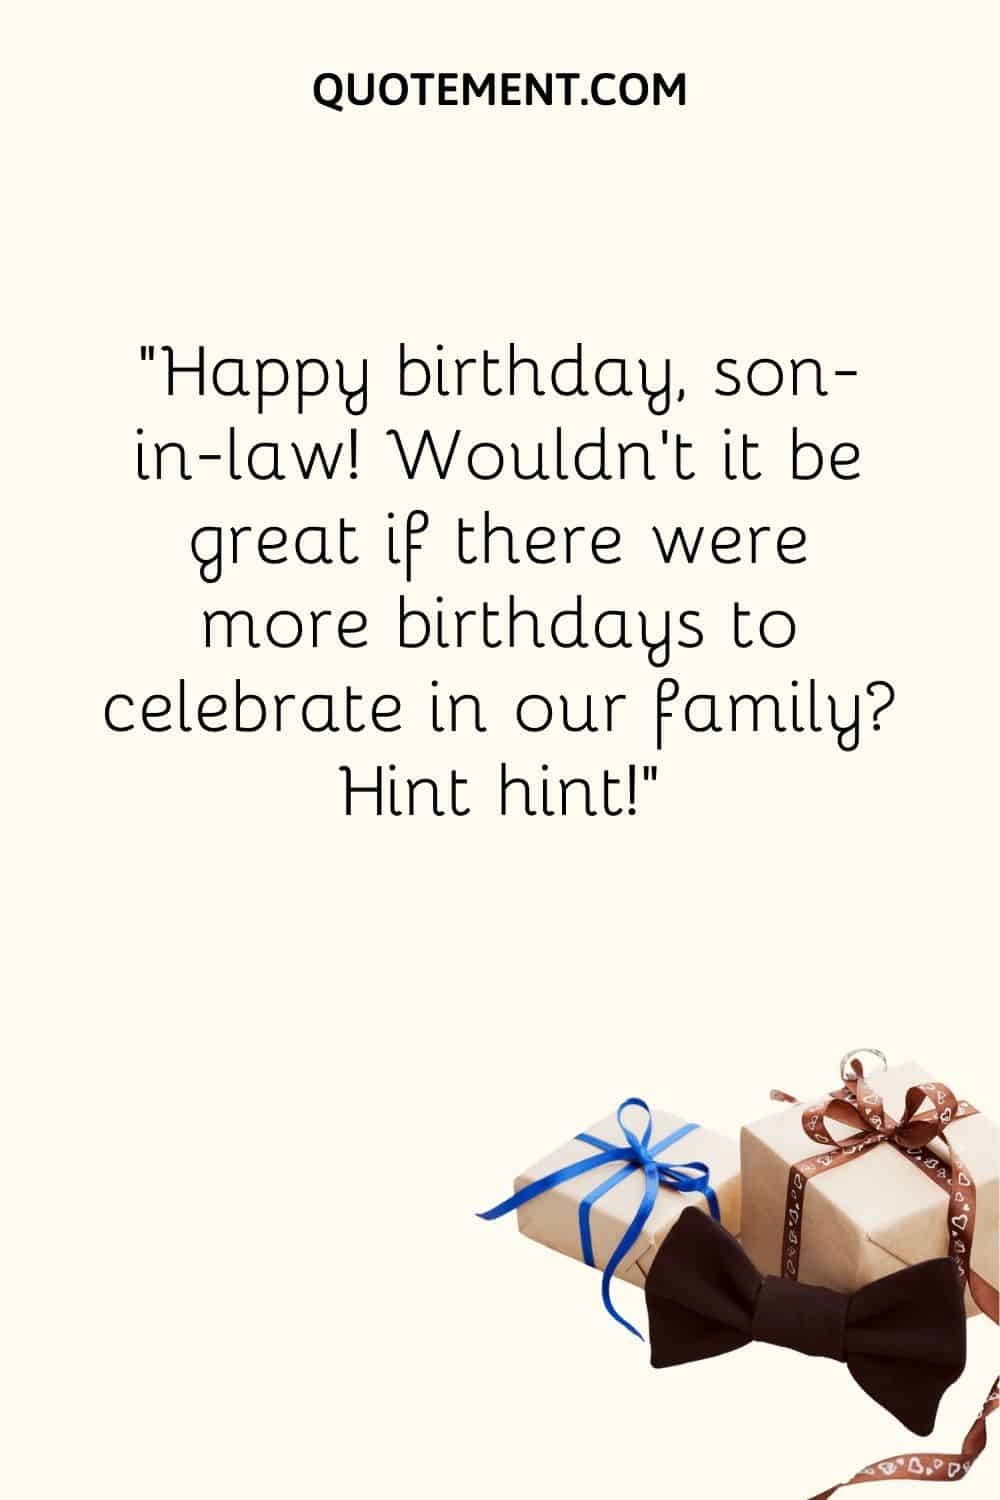 Happy birthday, son-in-law